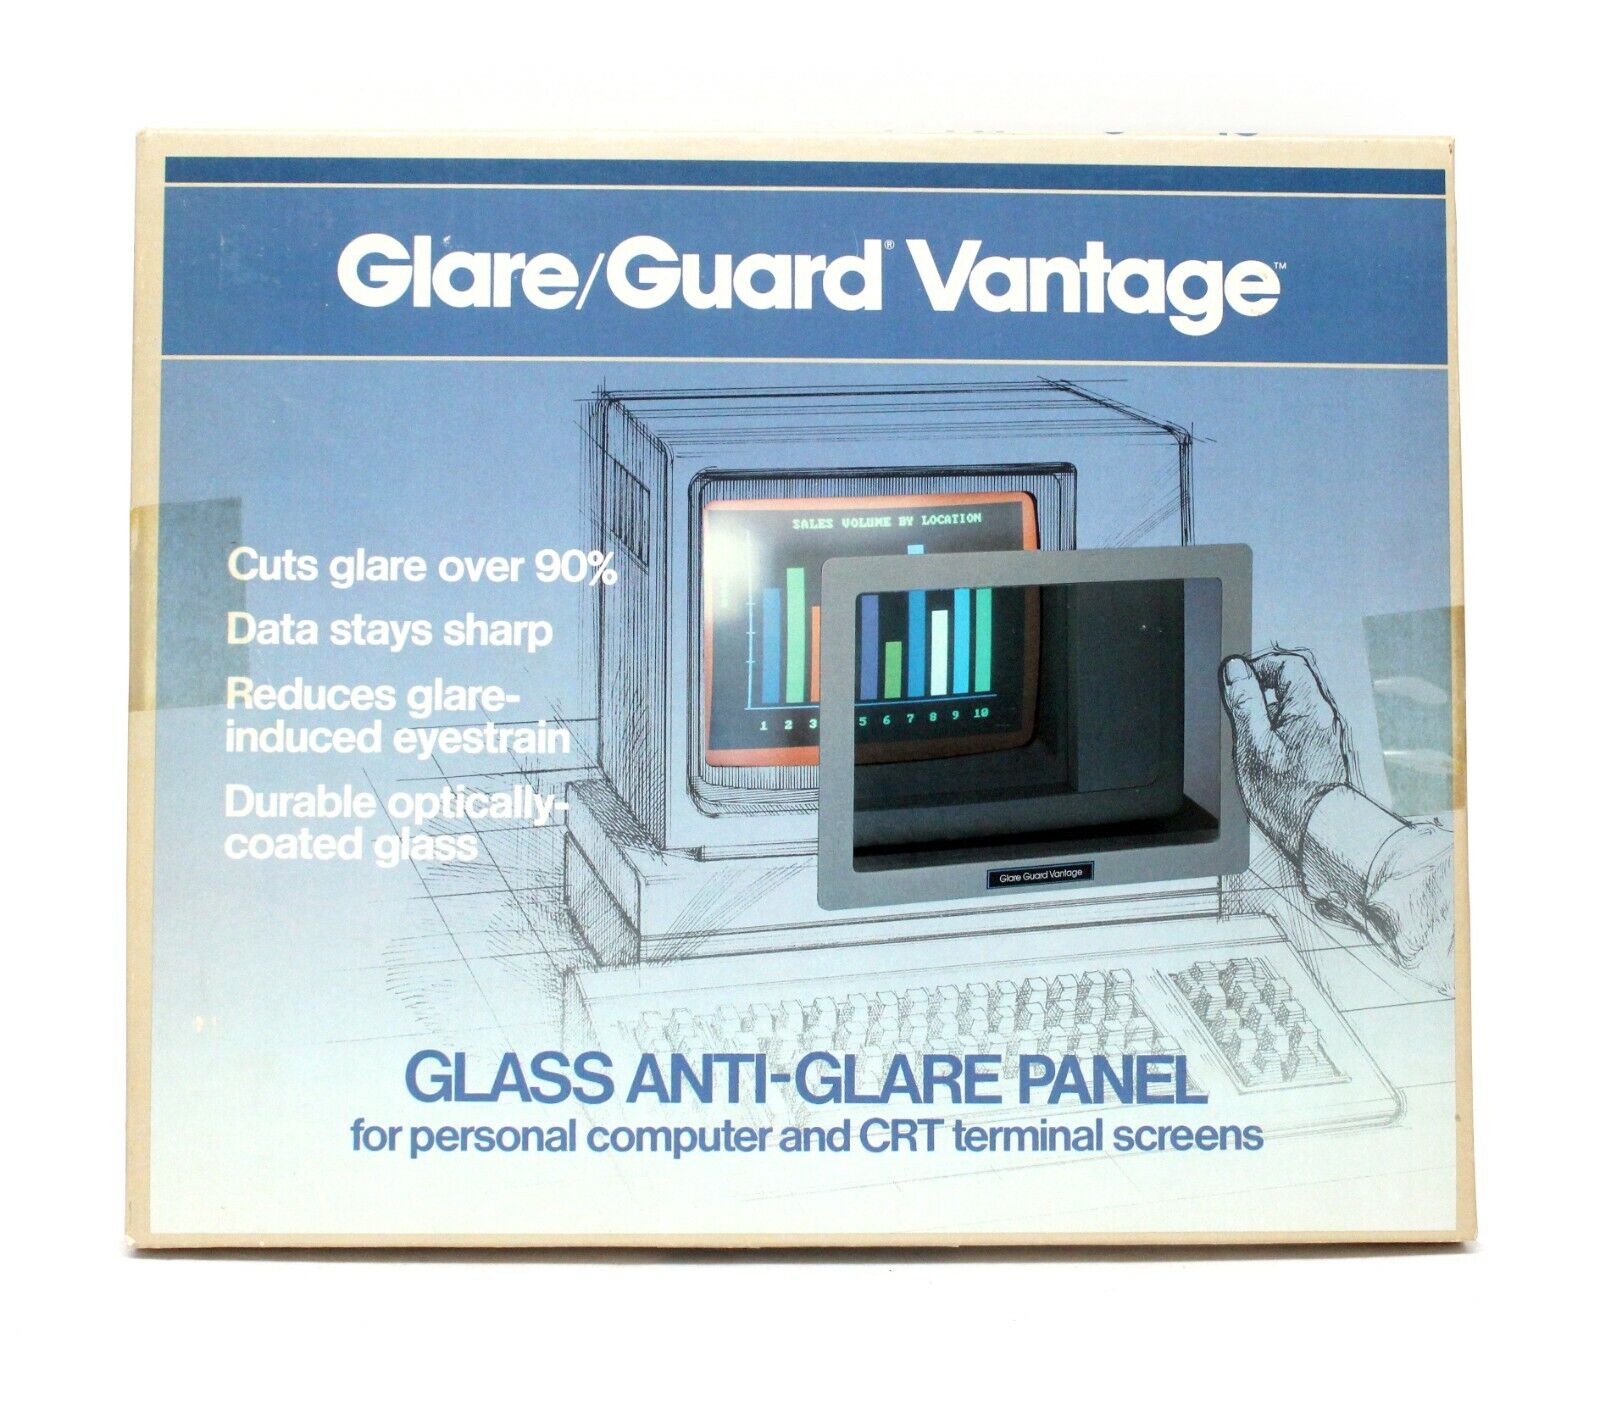 Vintage Optical Coating Laboratory Glare Guard Vantage Glass Anti-Glare Panel